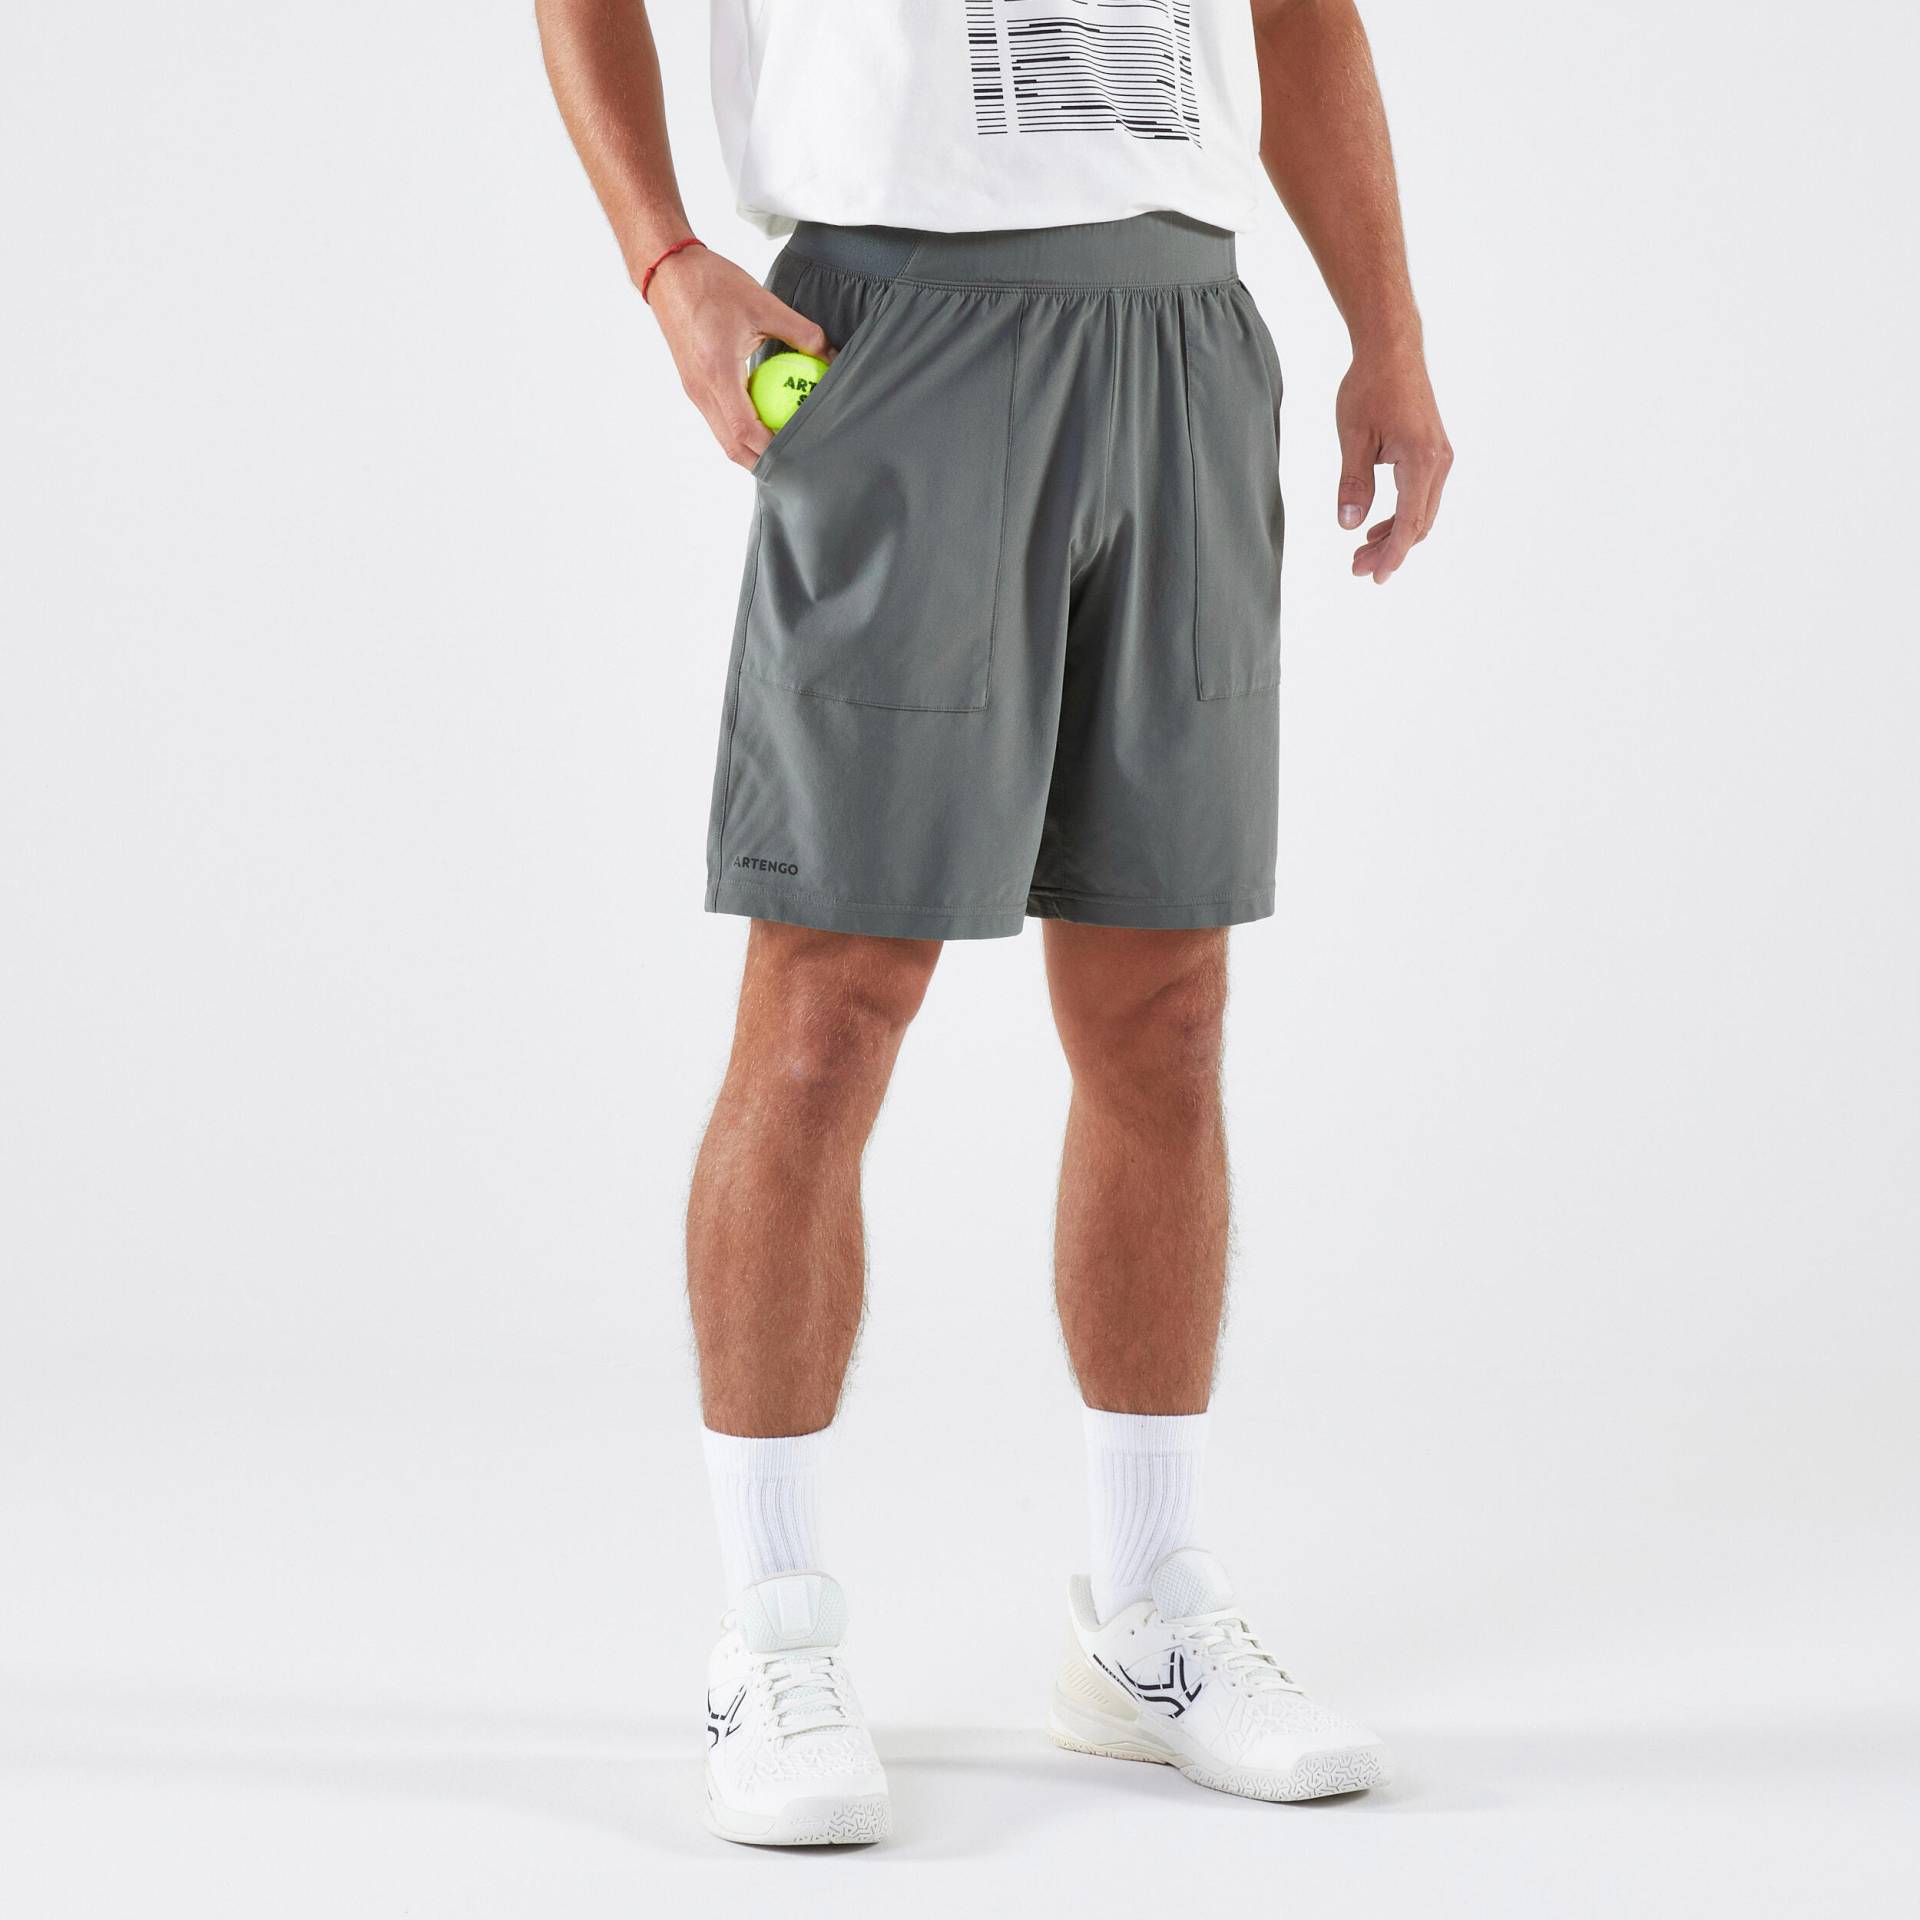 Herren Tennis Shorts atmungsaktiv - Dry khaki von ARTENGO